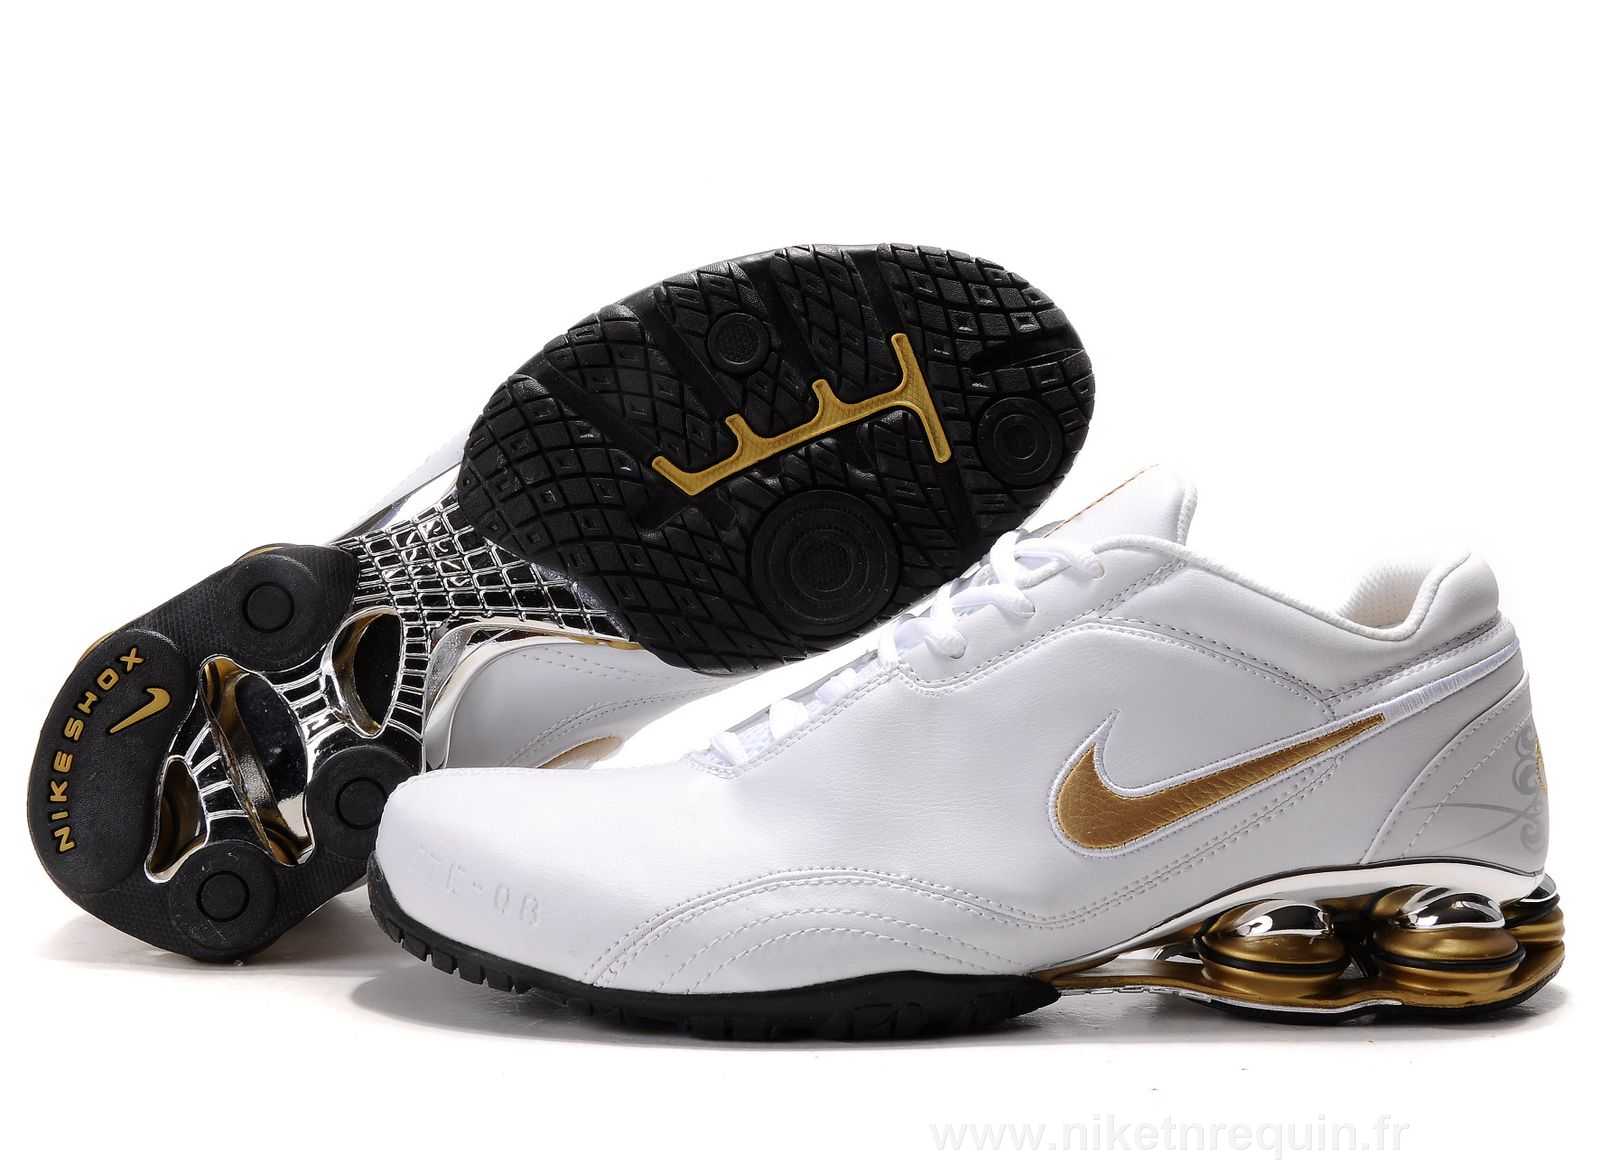 Blanc Et Or Chaussures Nikeshox R5